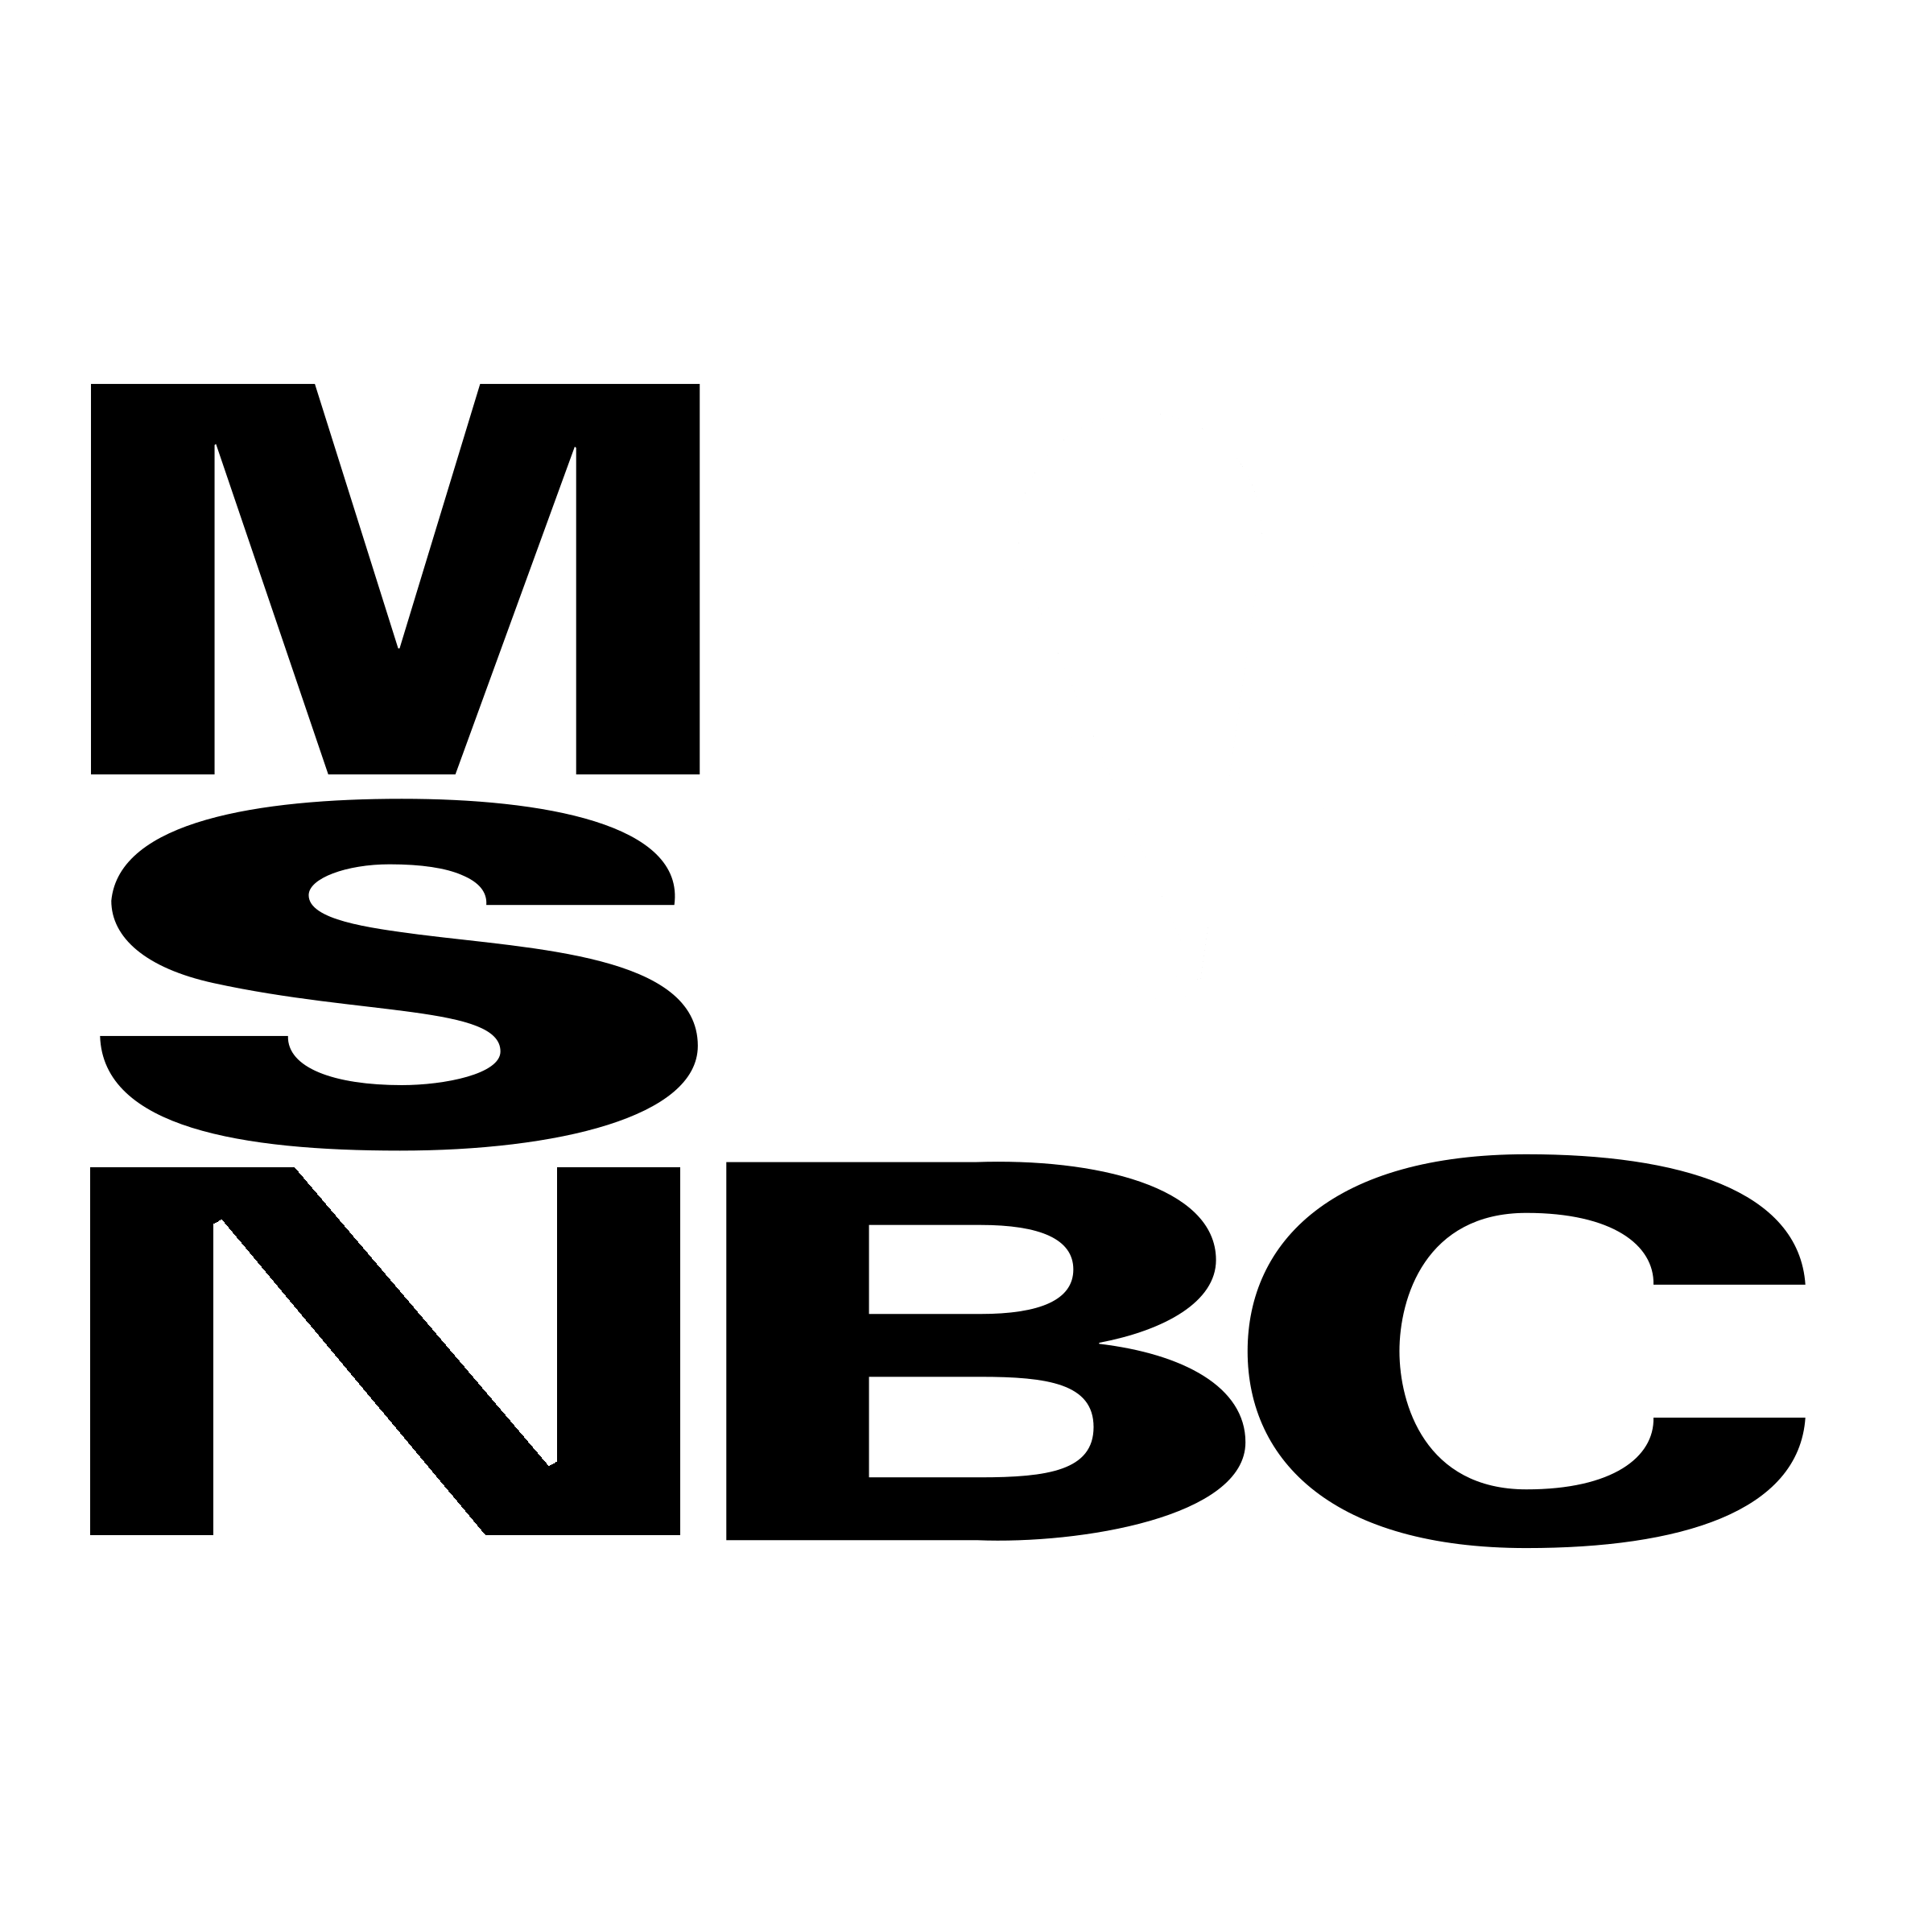 MSNBC Logo - MSNBC Logo PNG Transparent & SVG Vector - Freebie Supply